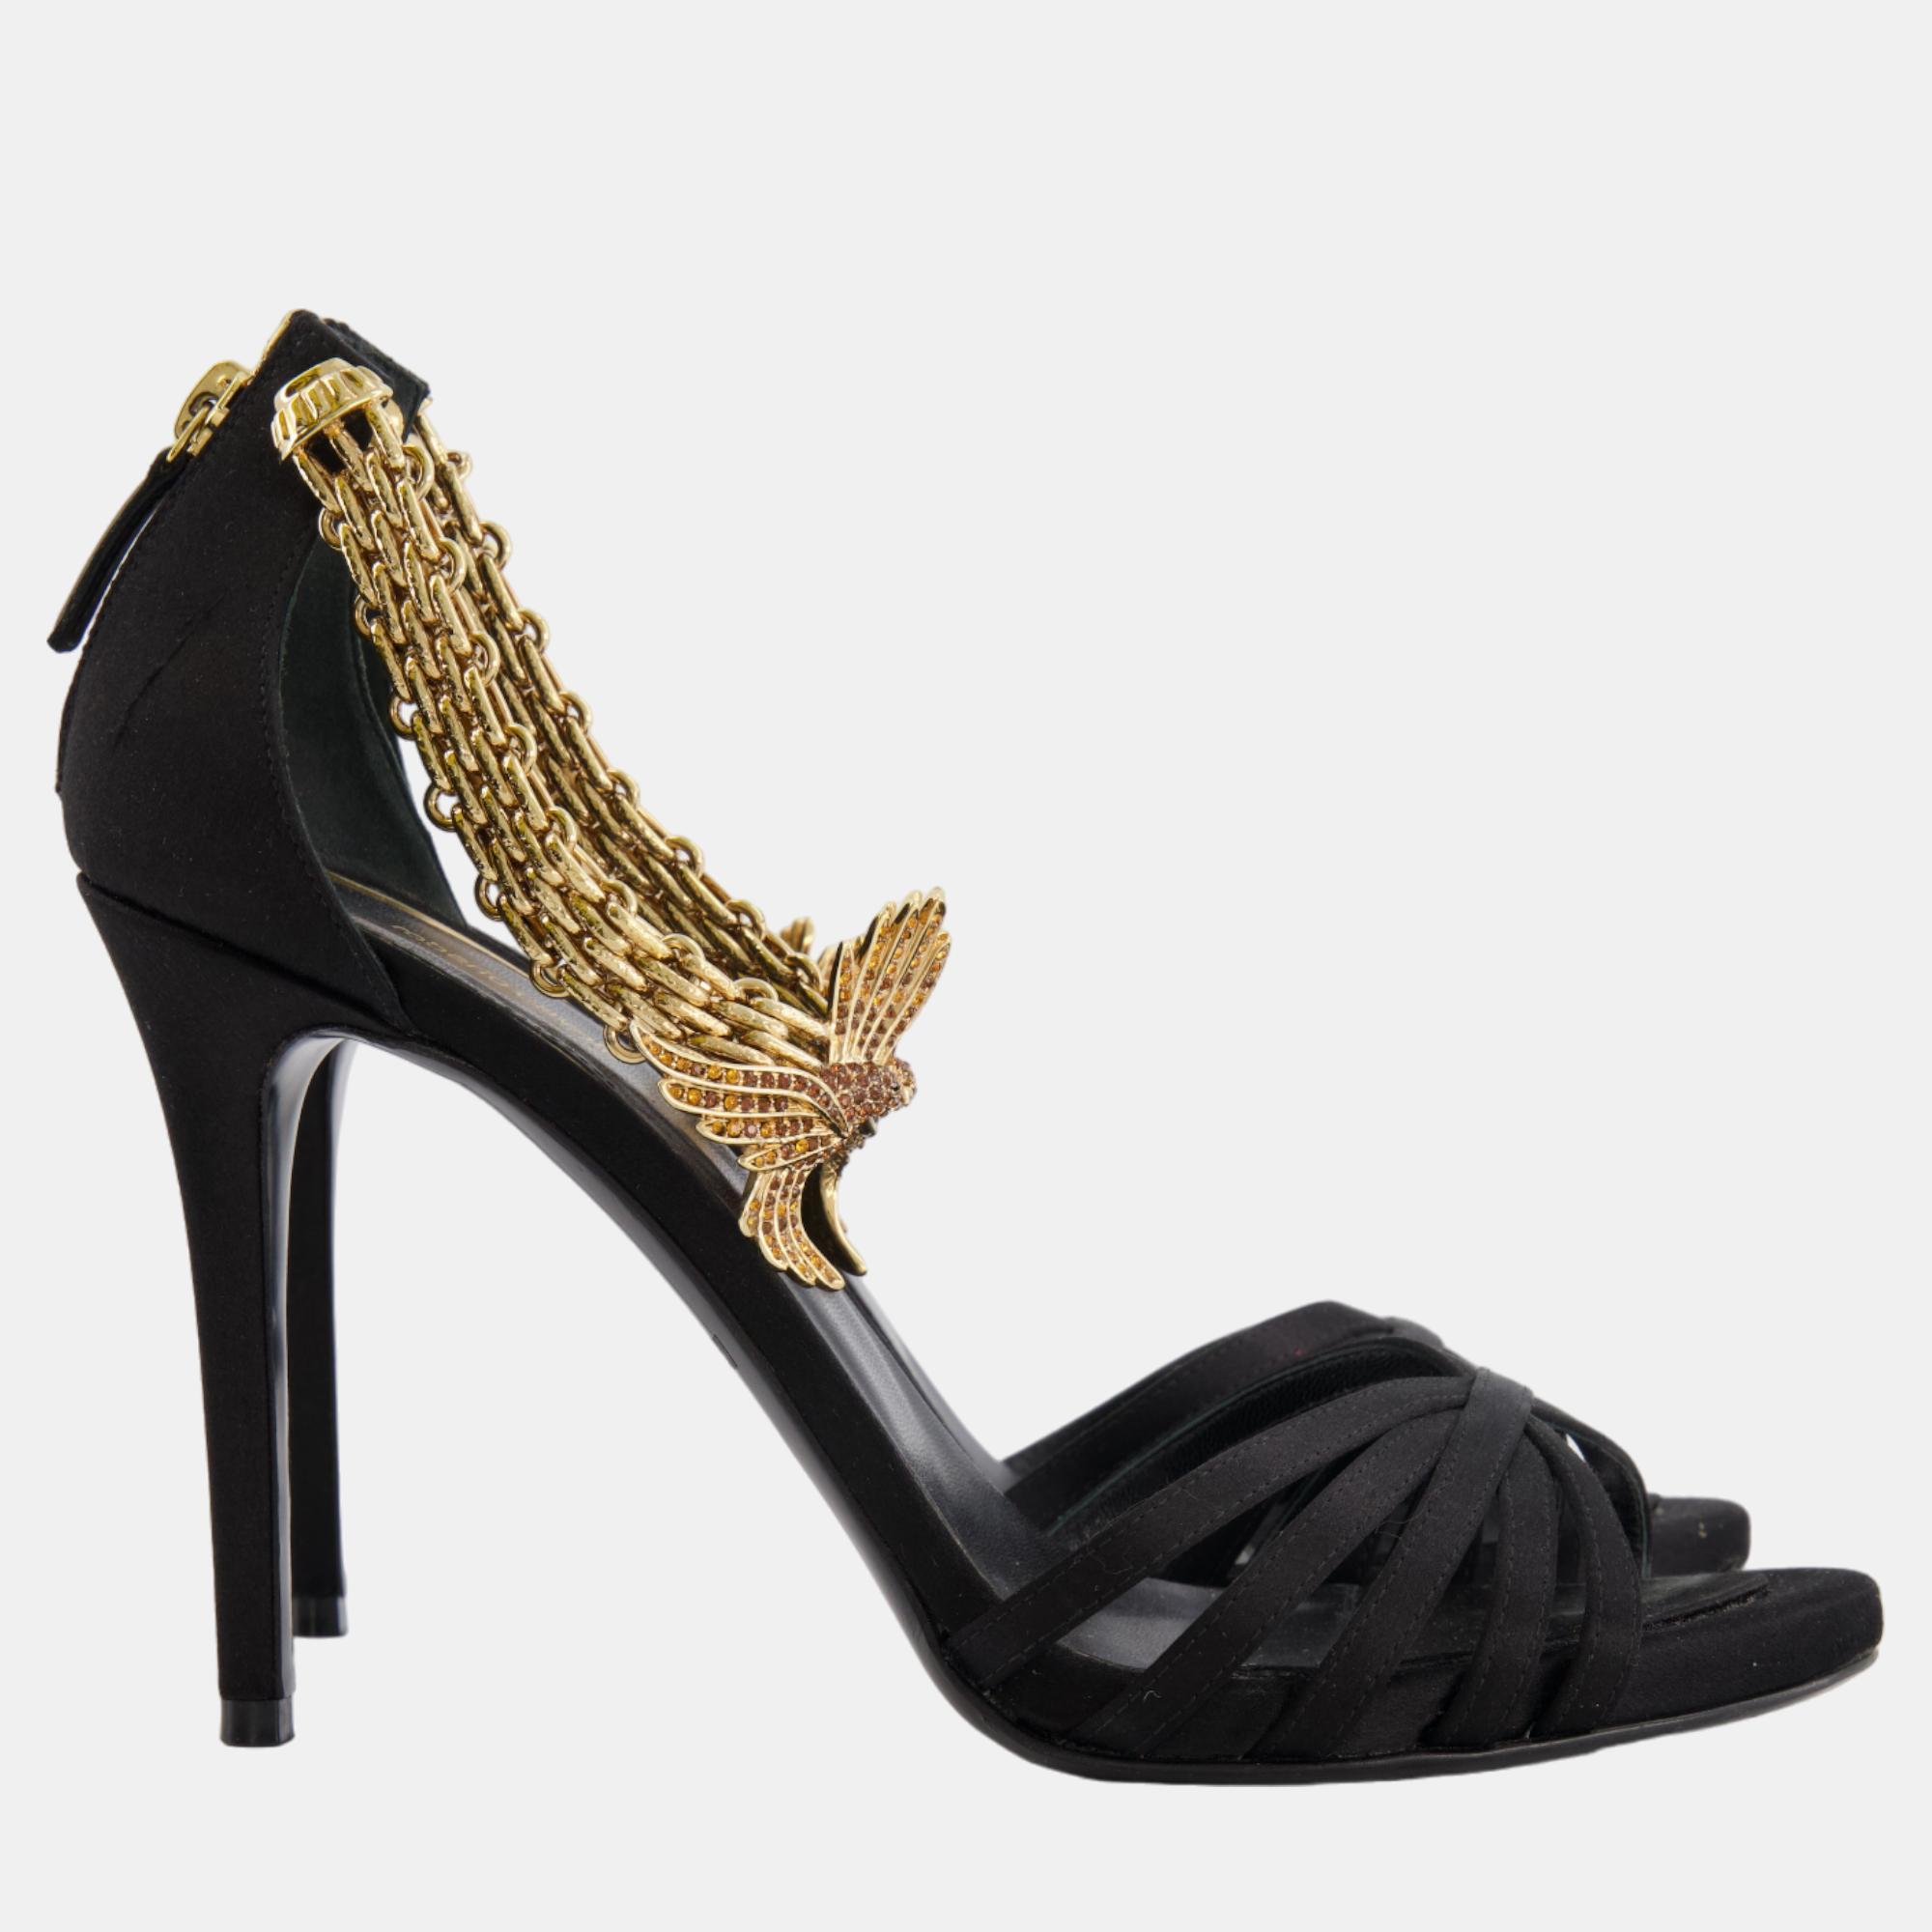 Roberto cavalli black sandal heels with crystal gold ankle-strap details size 39.5